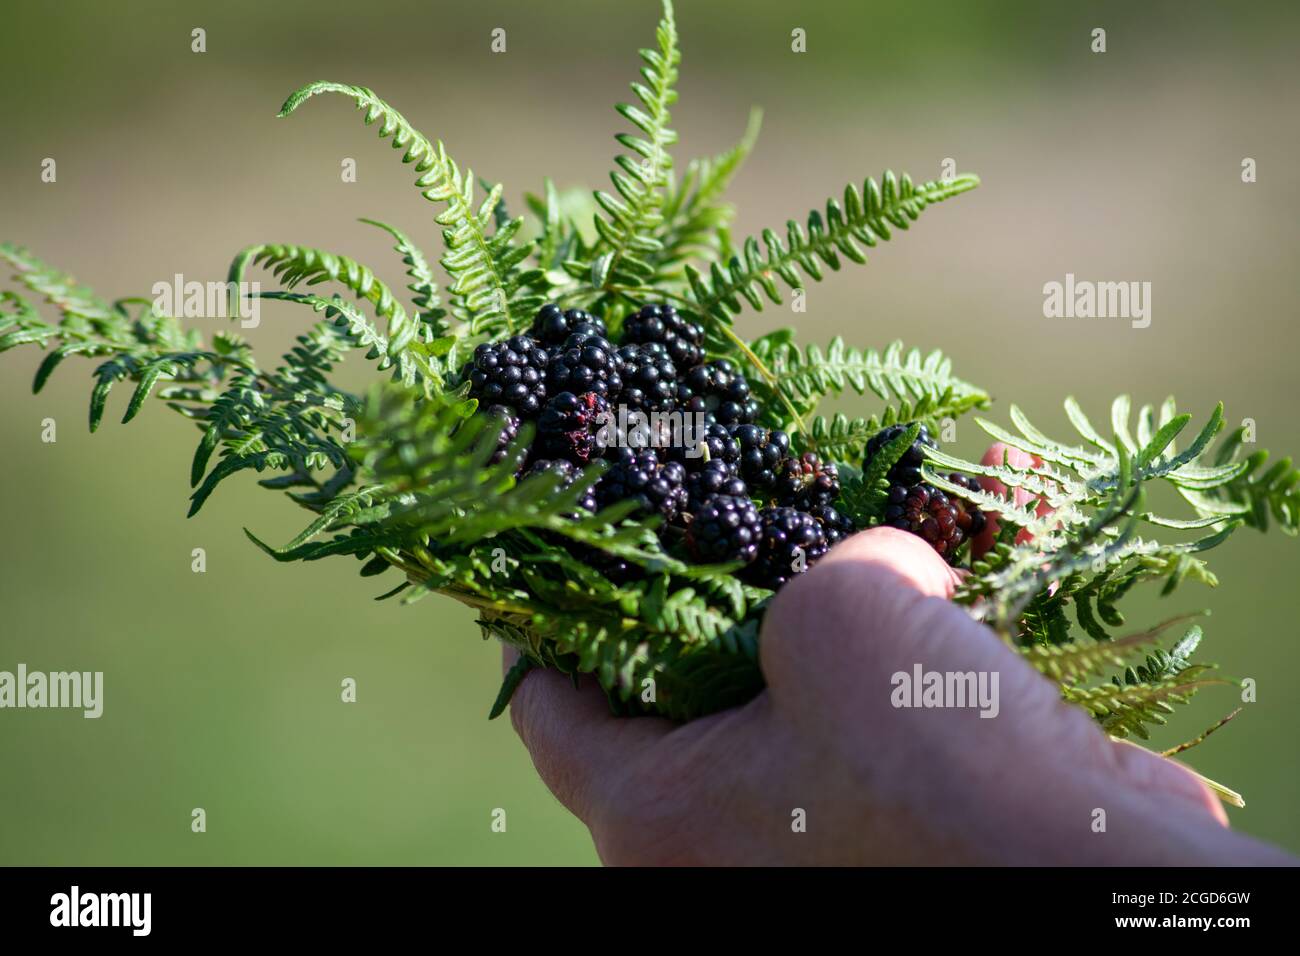 Hand holding wild blackberries in plant ferns, Rosaceae, Rubus edible fruit Stock Photo